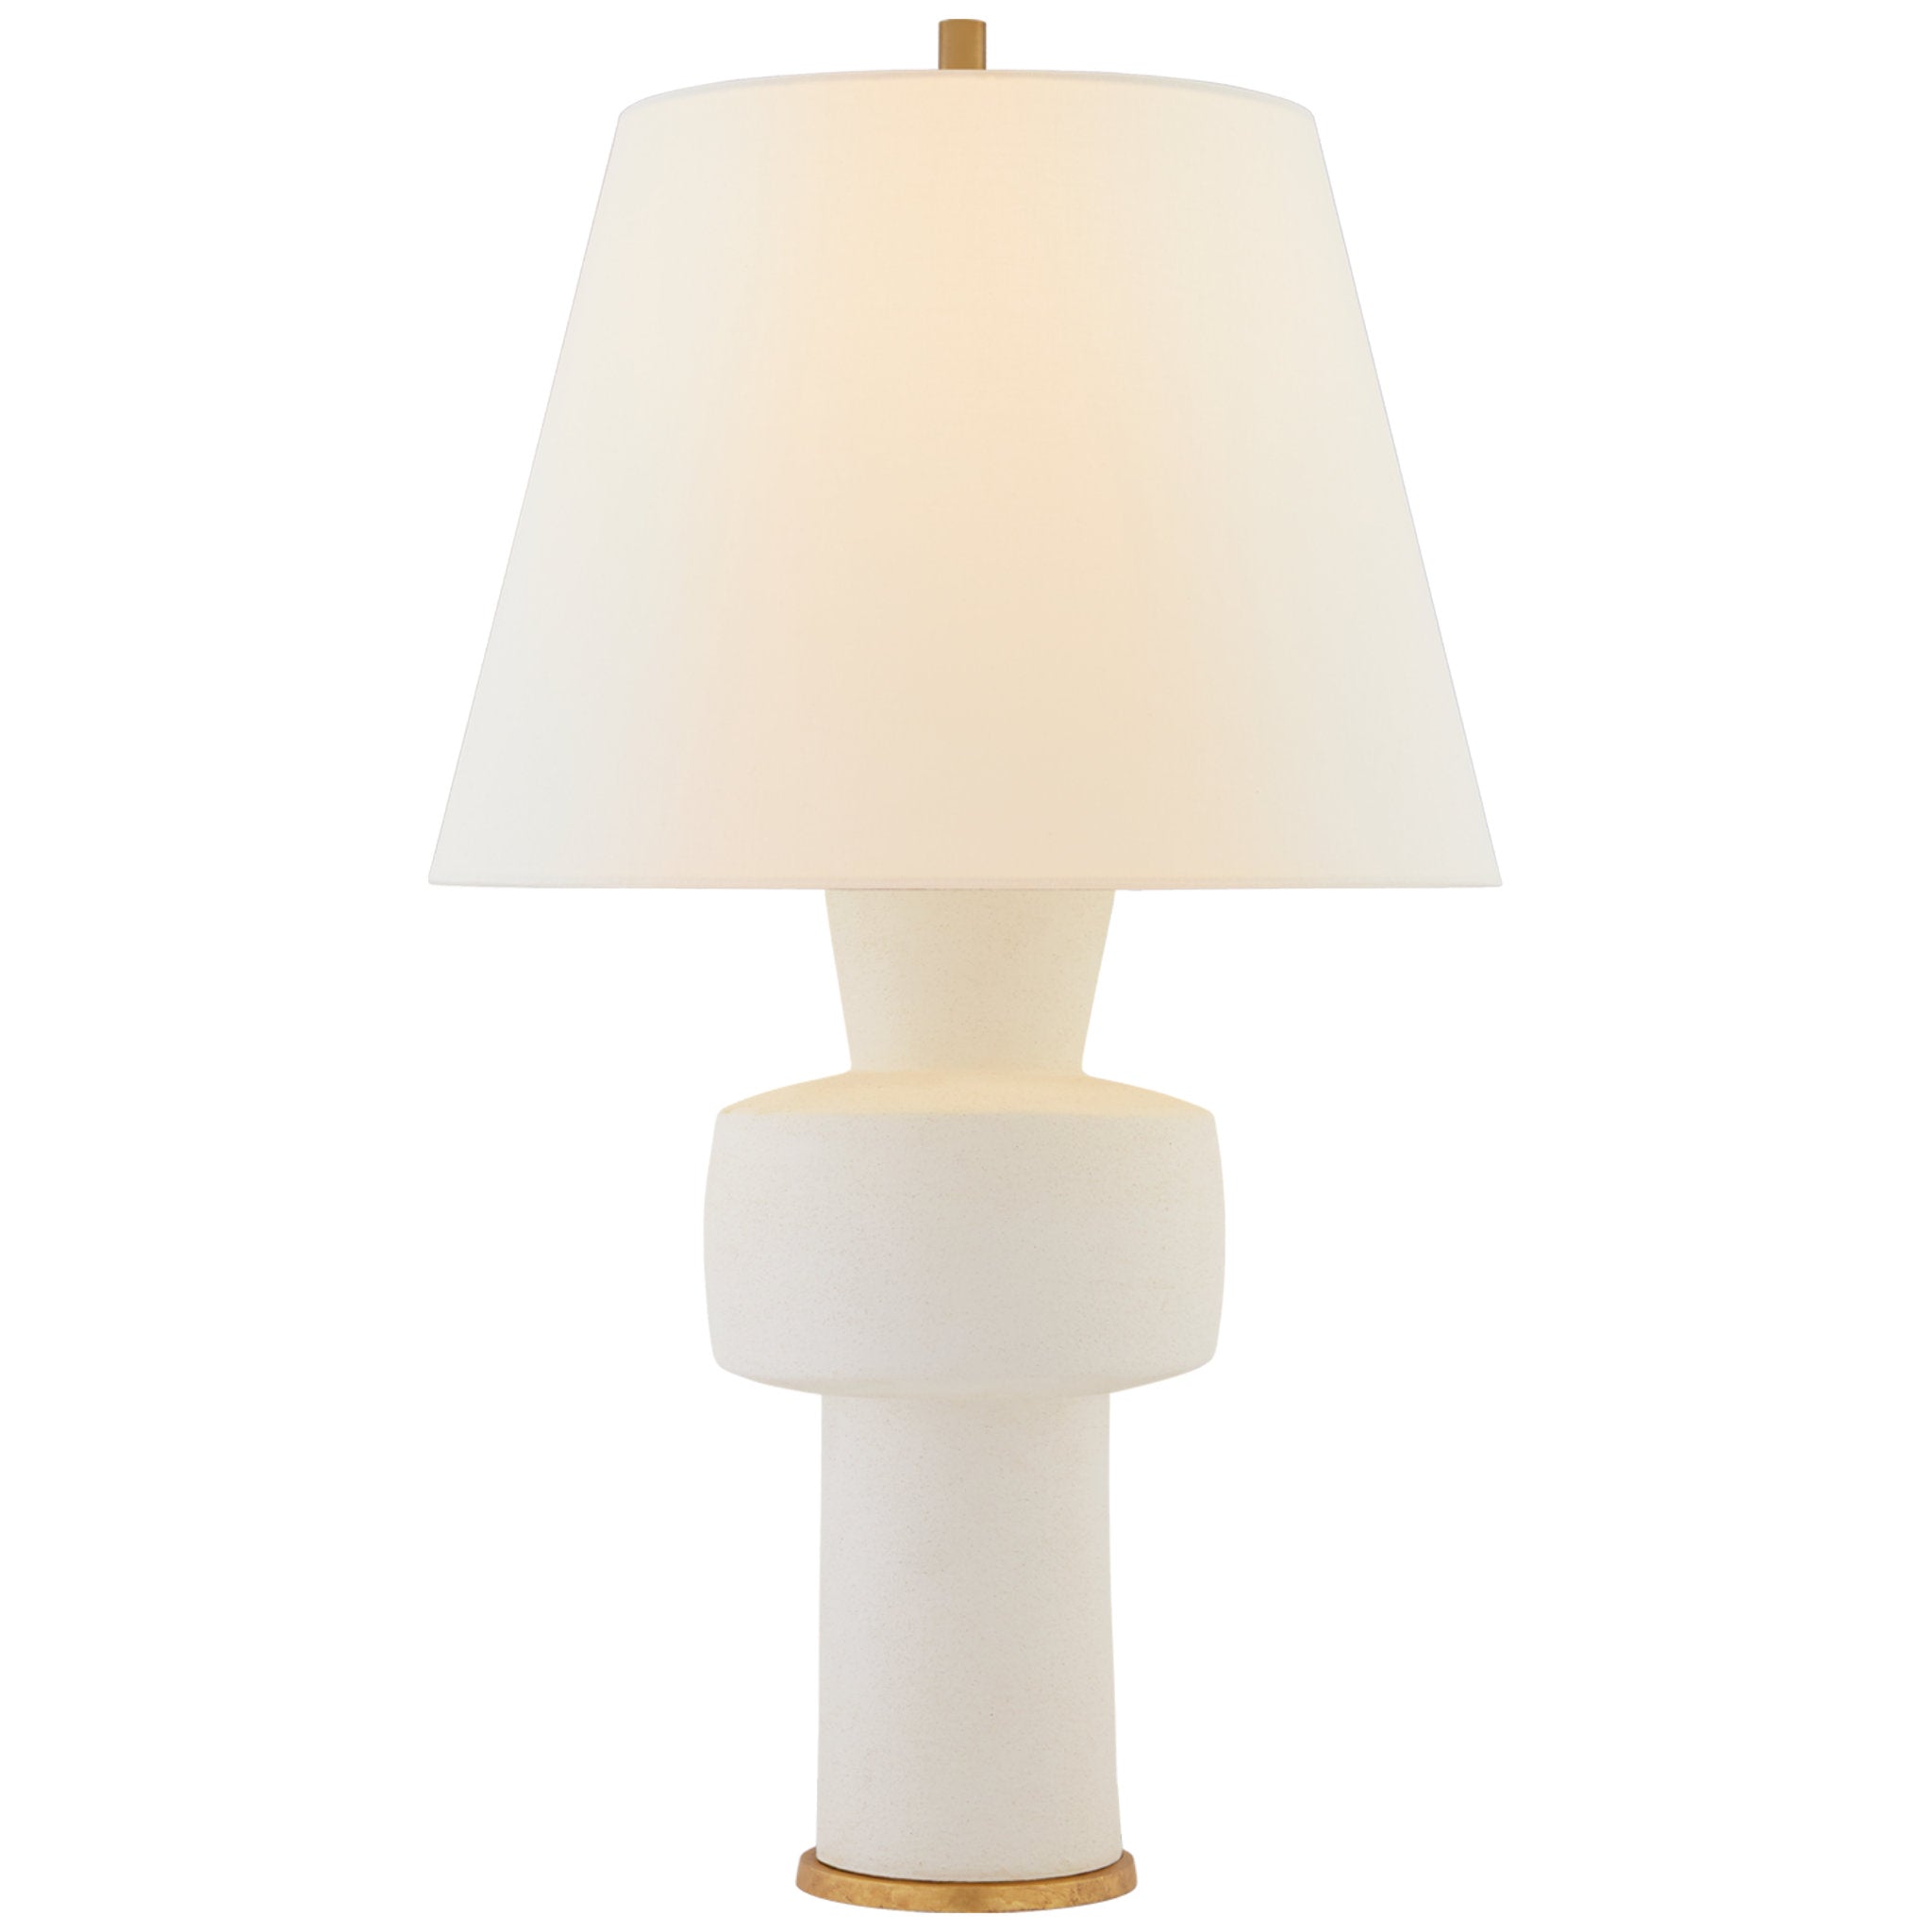 Christopher Spitzmiller Eerdmans Medium Table Lamp in Sandy White with Linen Shade